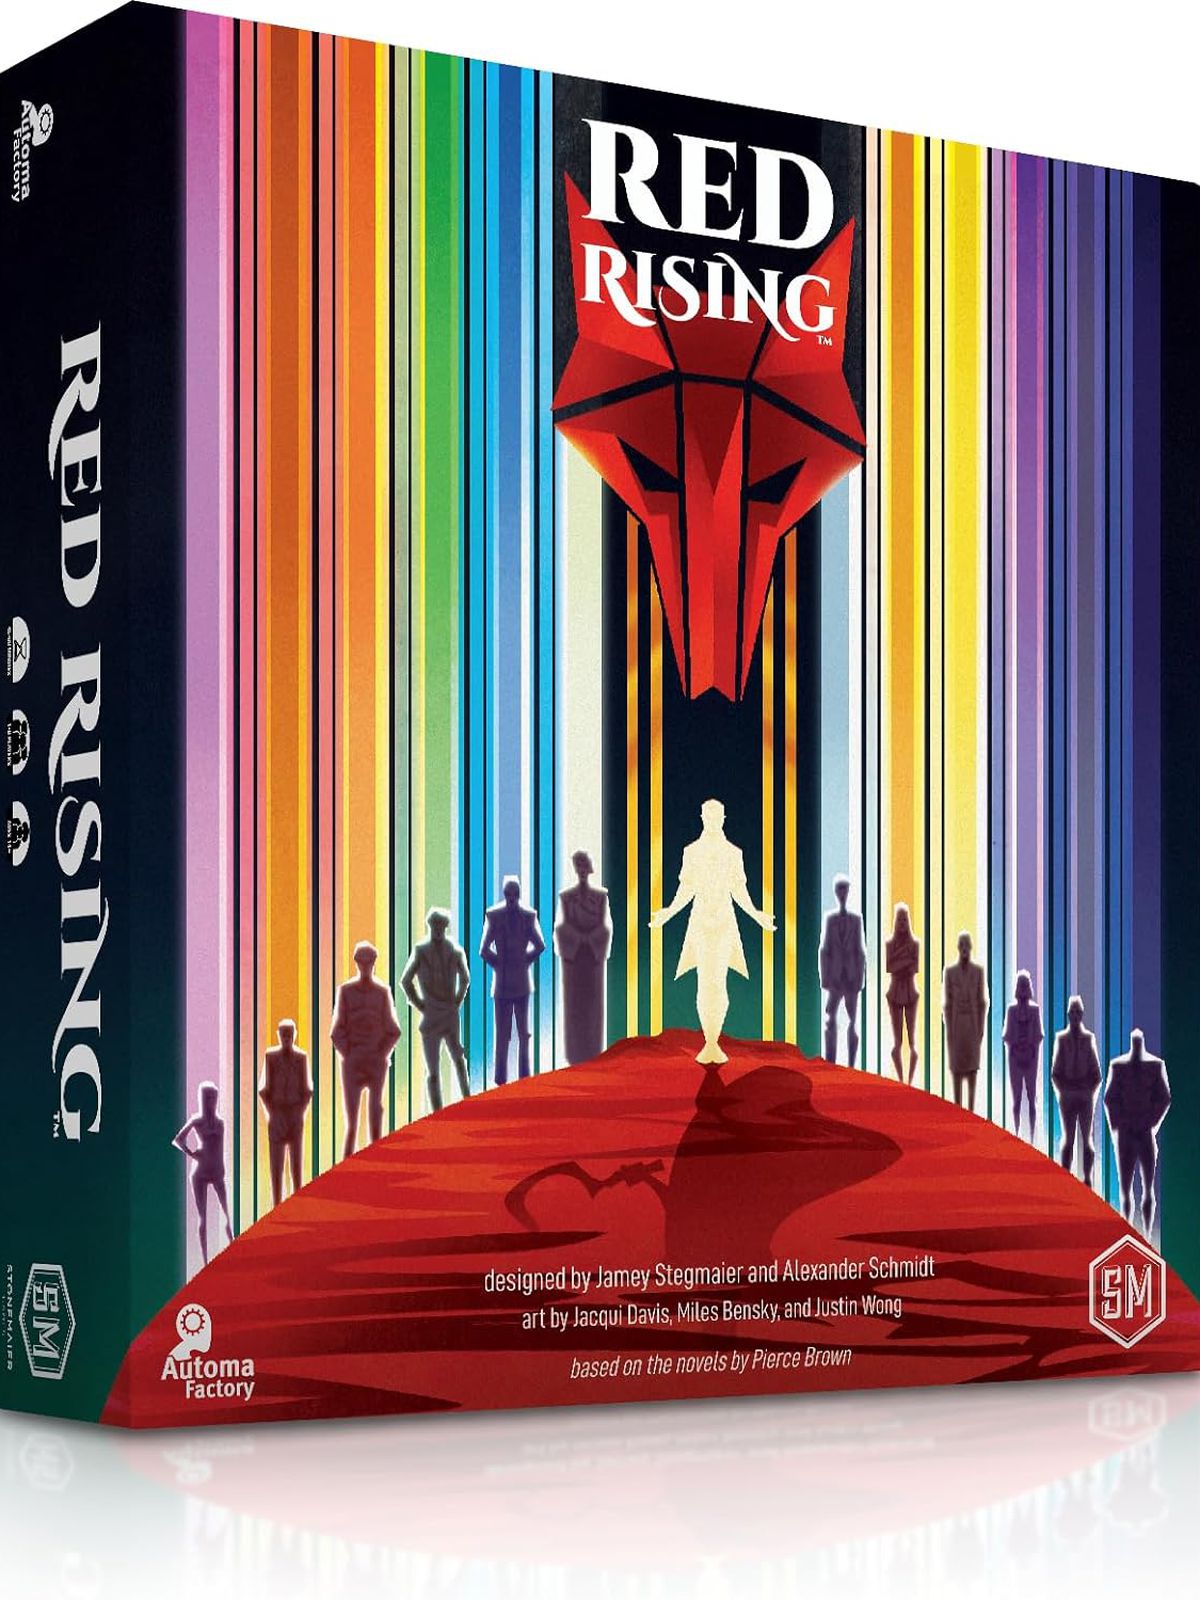 La boîte du jeu Red Rising.